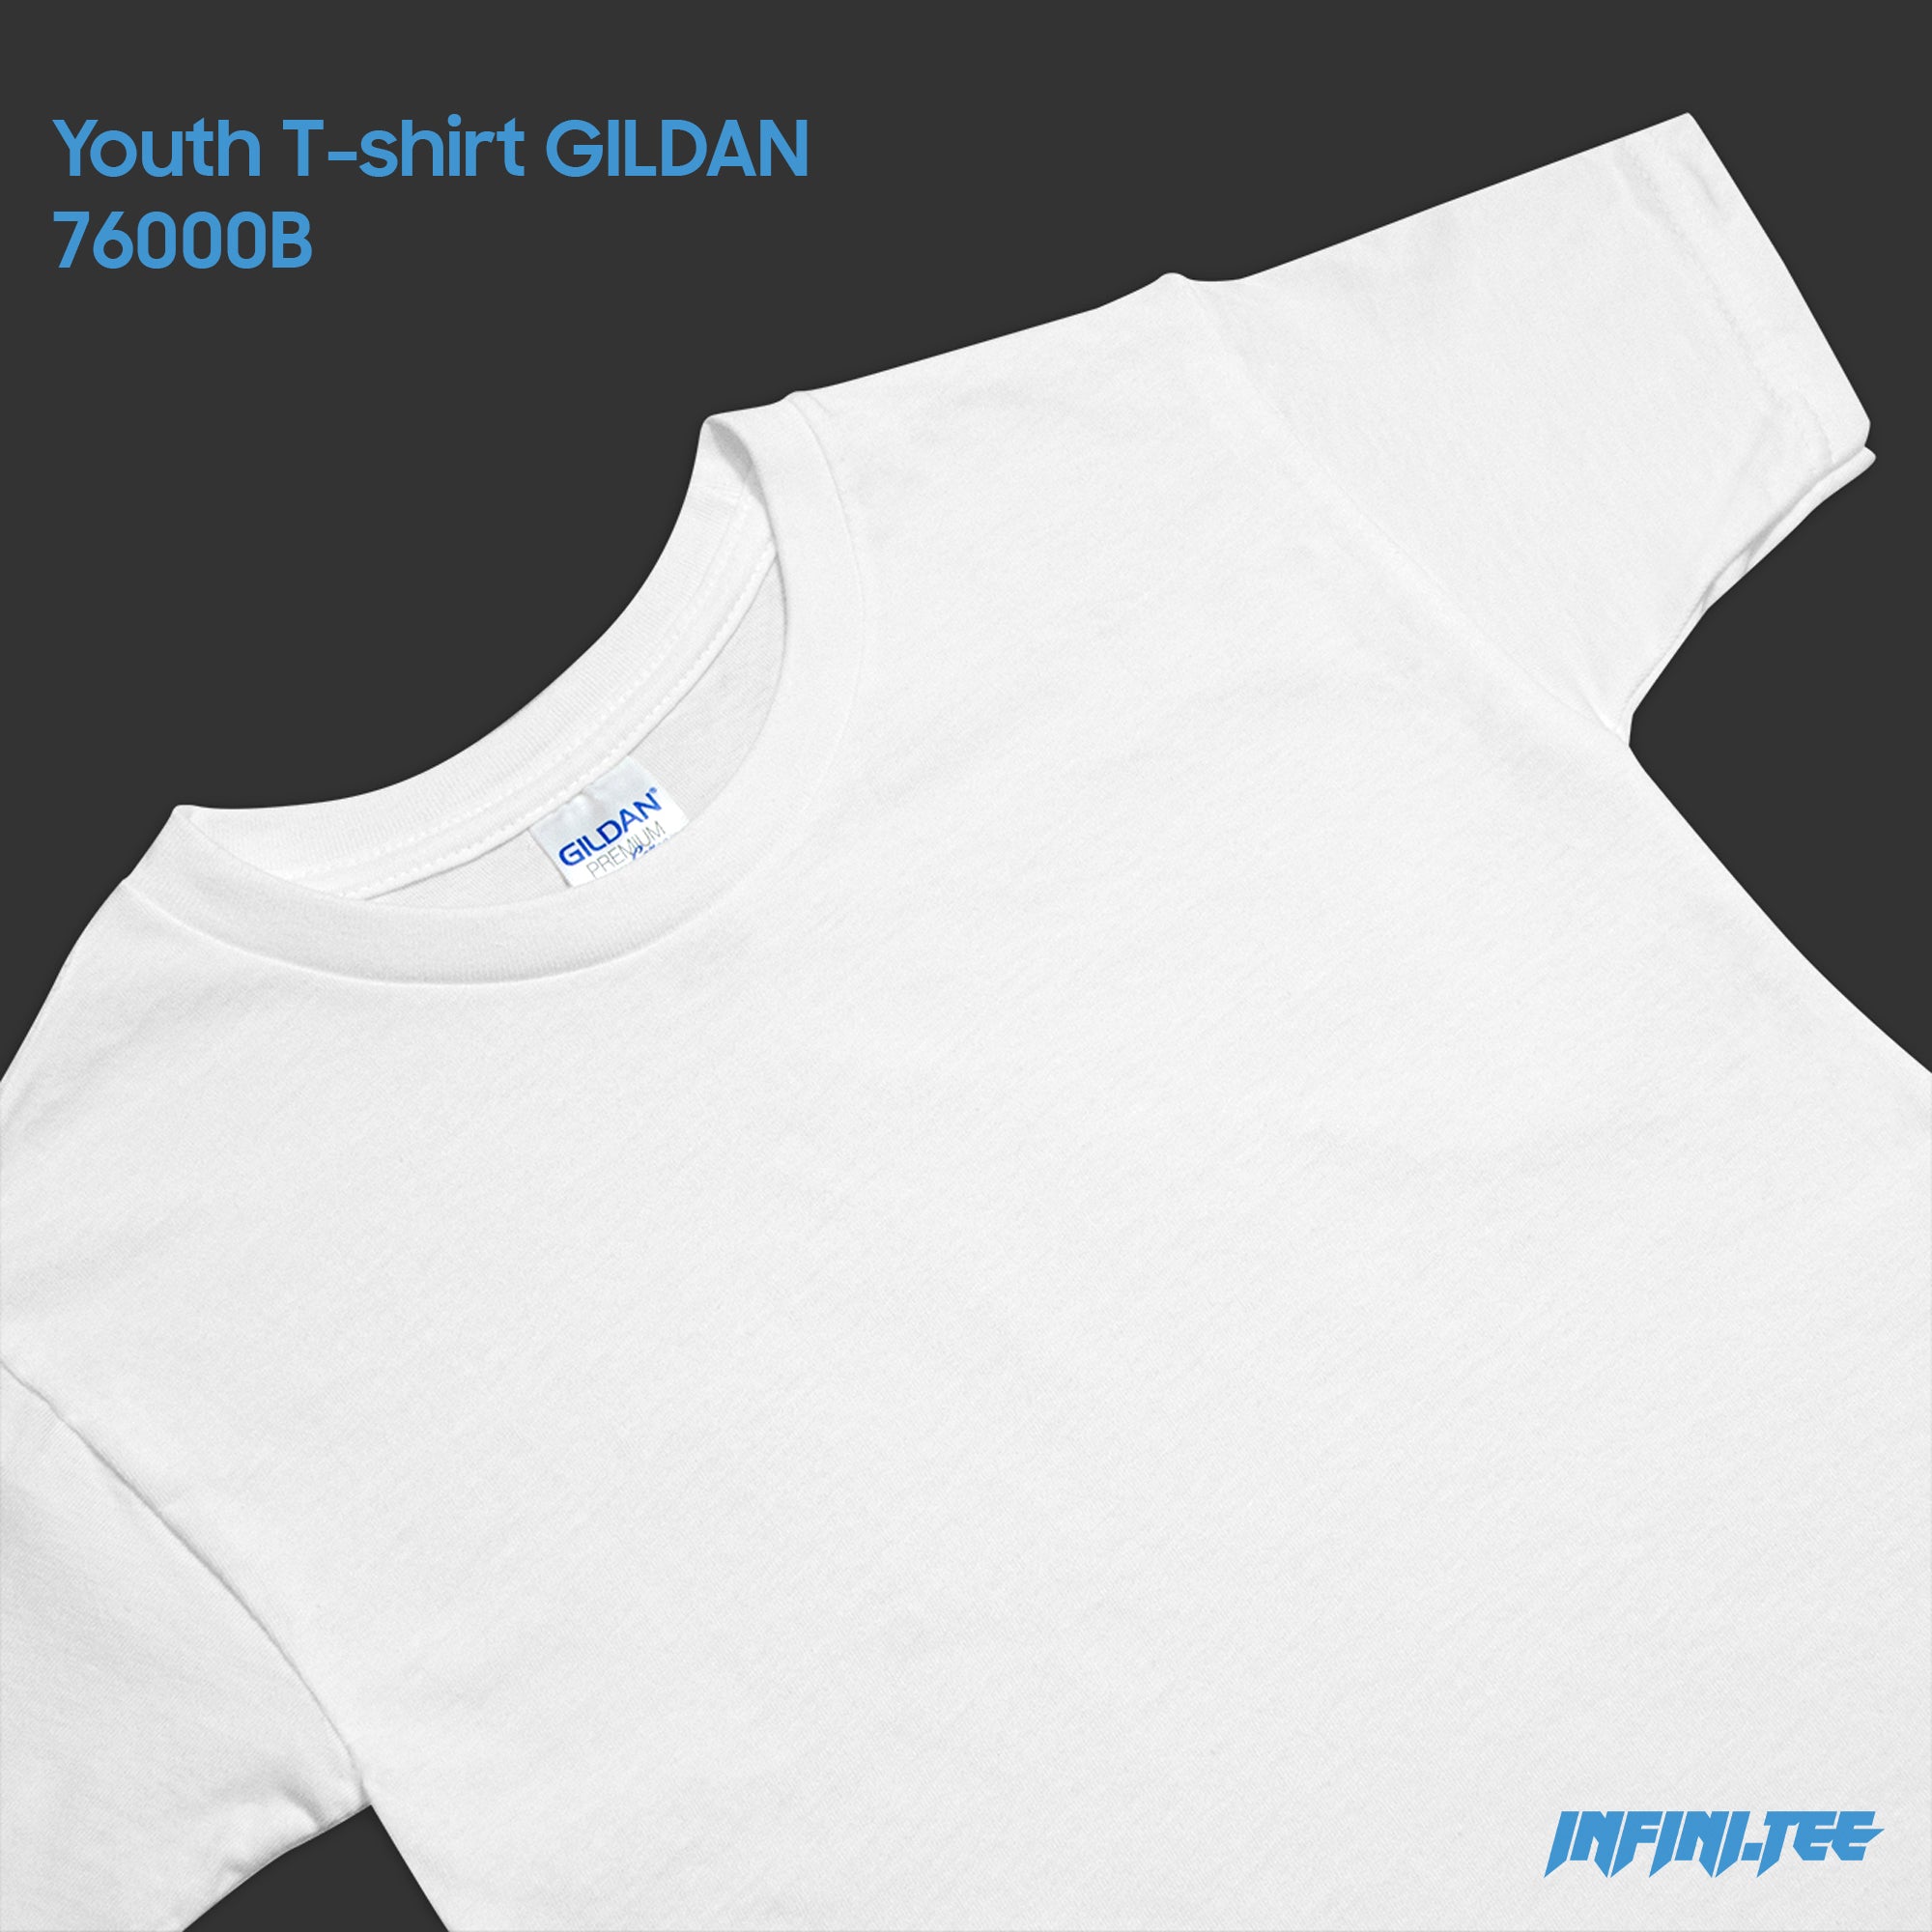 Youth T-shirt 76000B GILDAN - WHITE